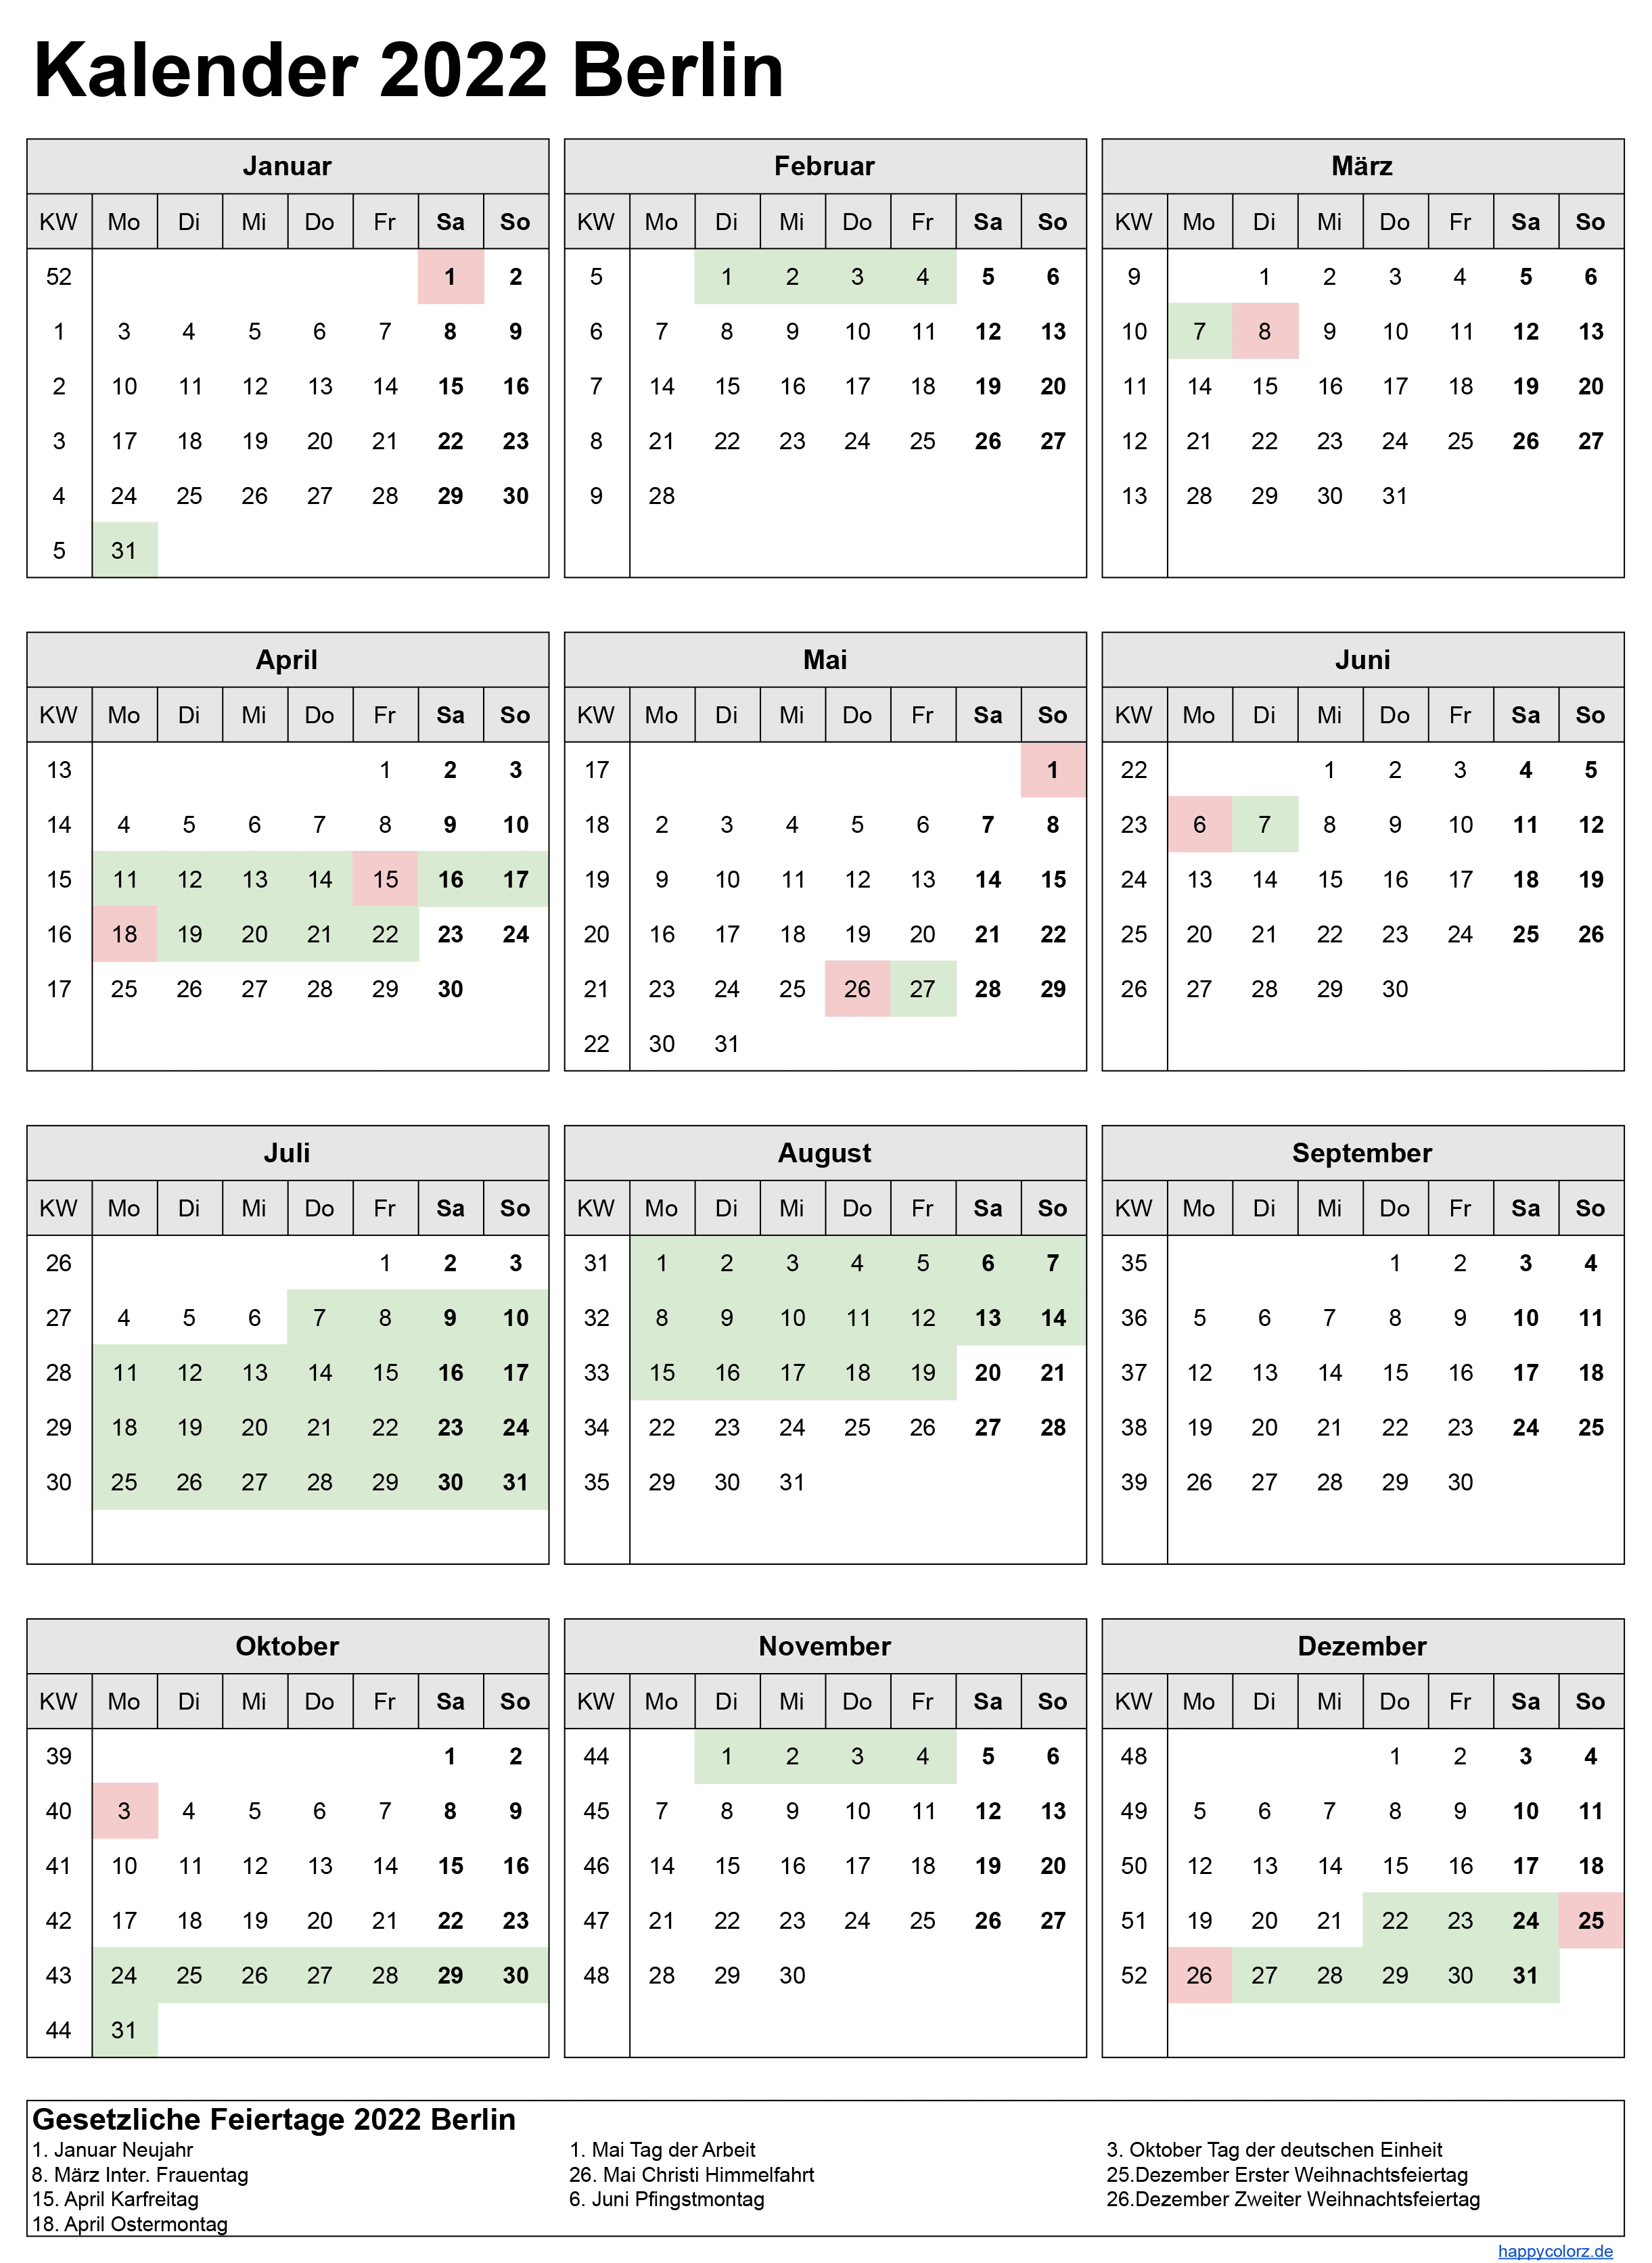 Kalender 2022 Berlin zum Ausdrucken